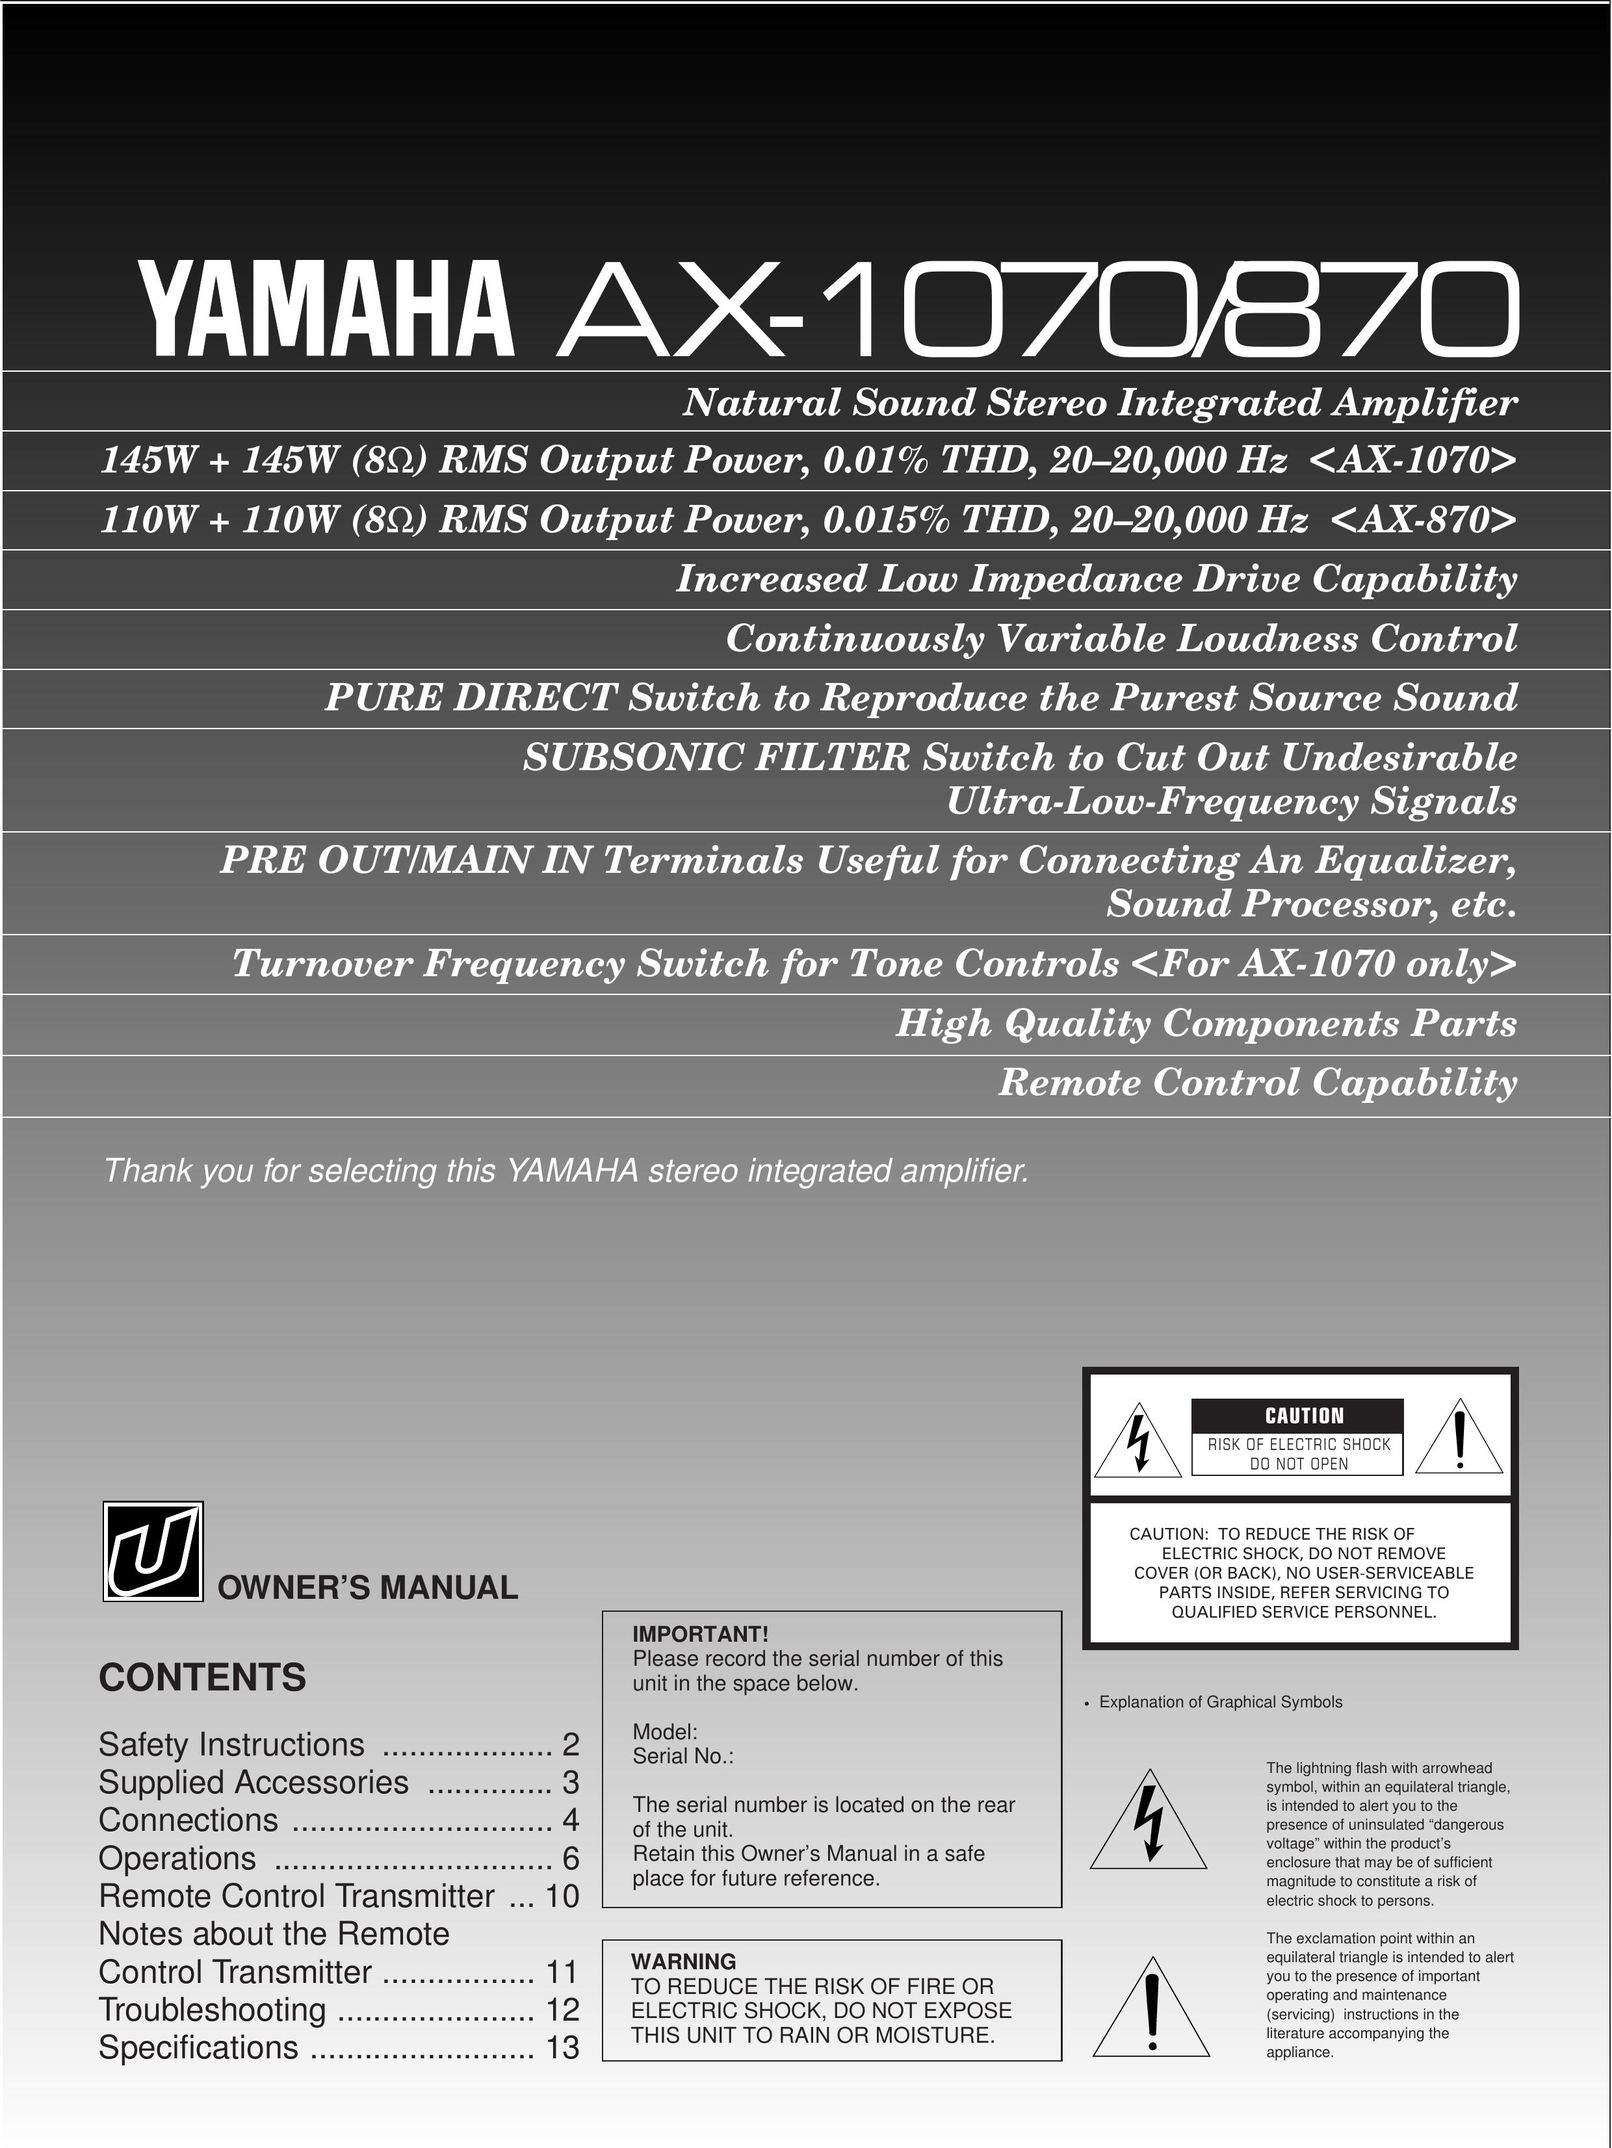 Yamaha AX-1070/870 Stereo Amplifier User Manual